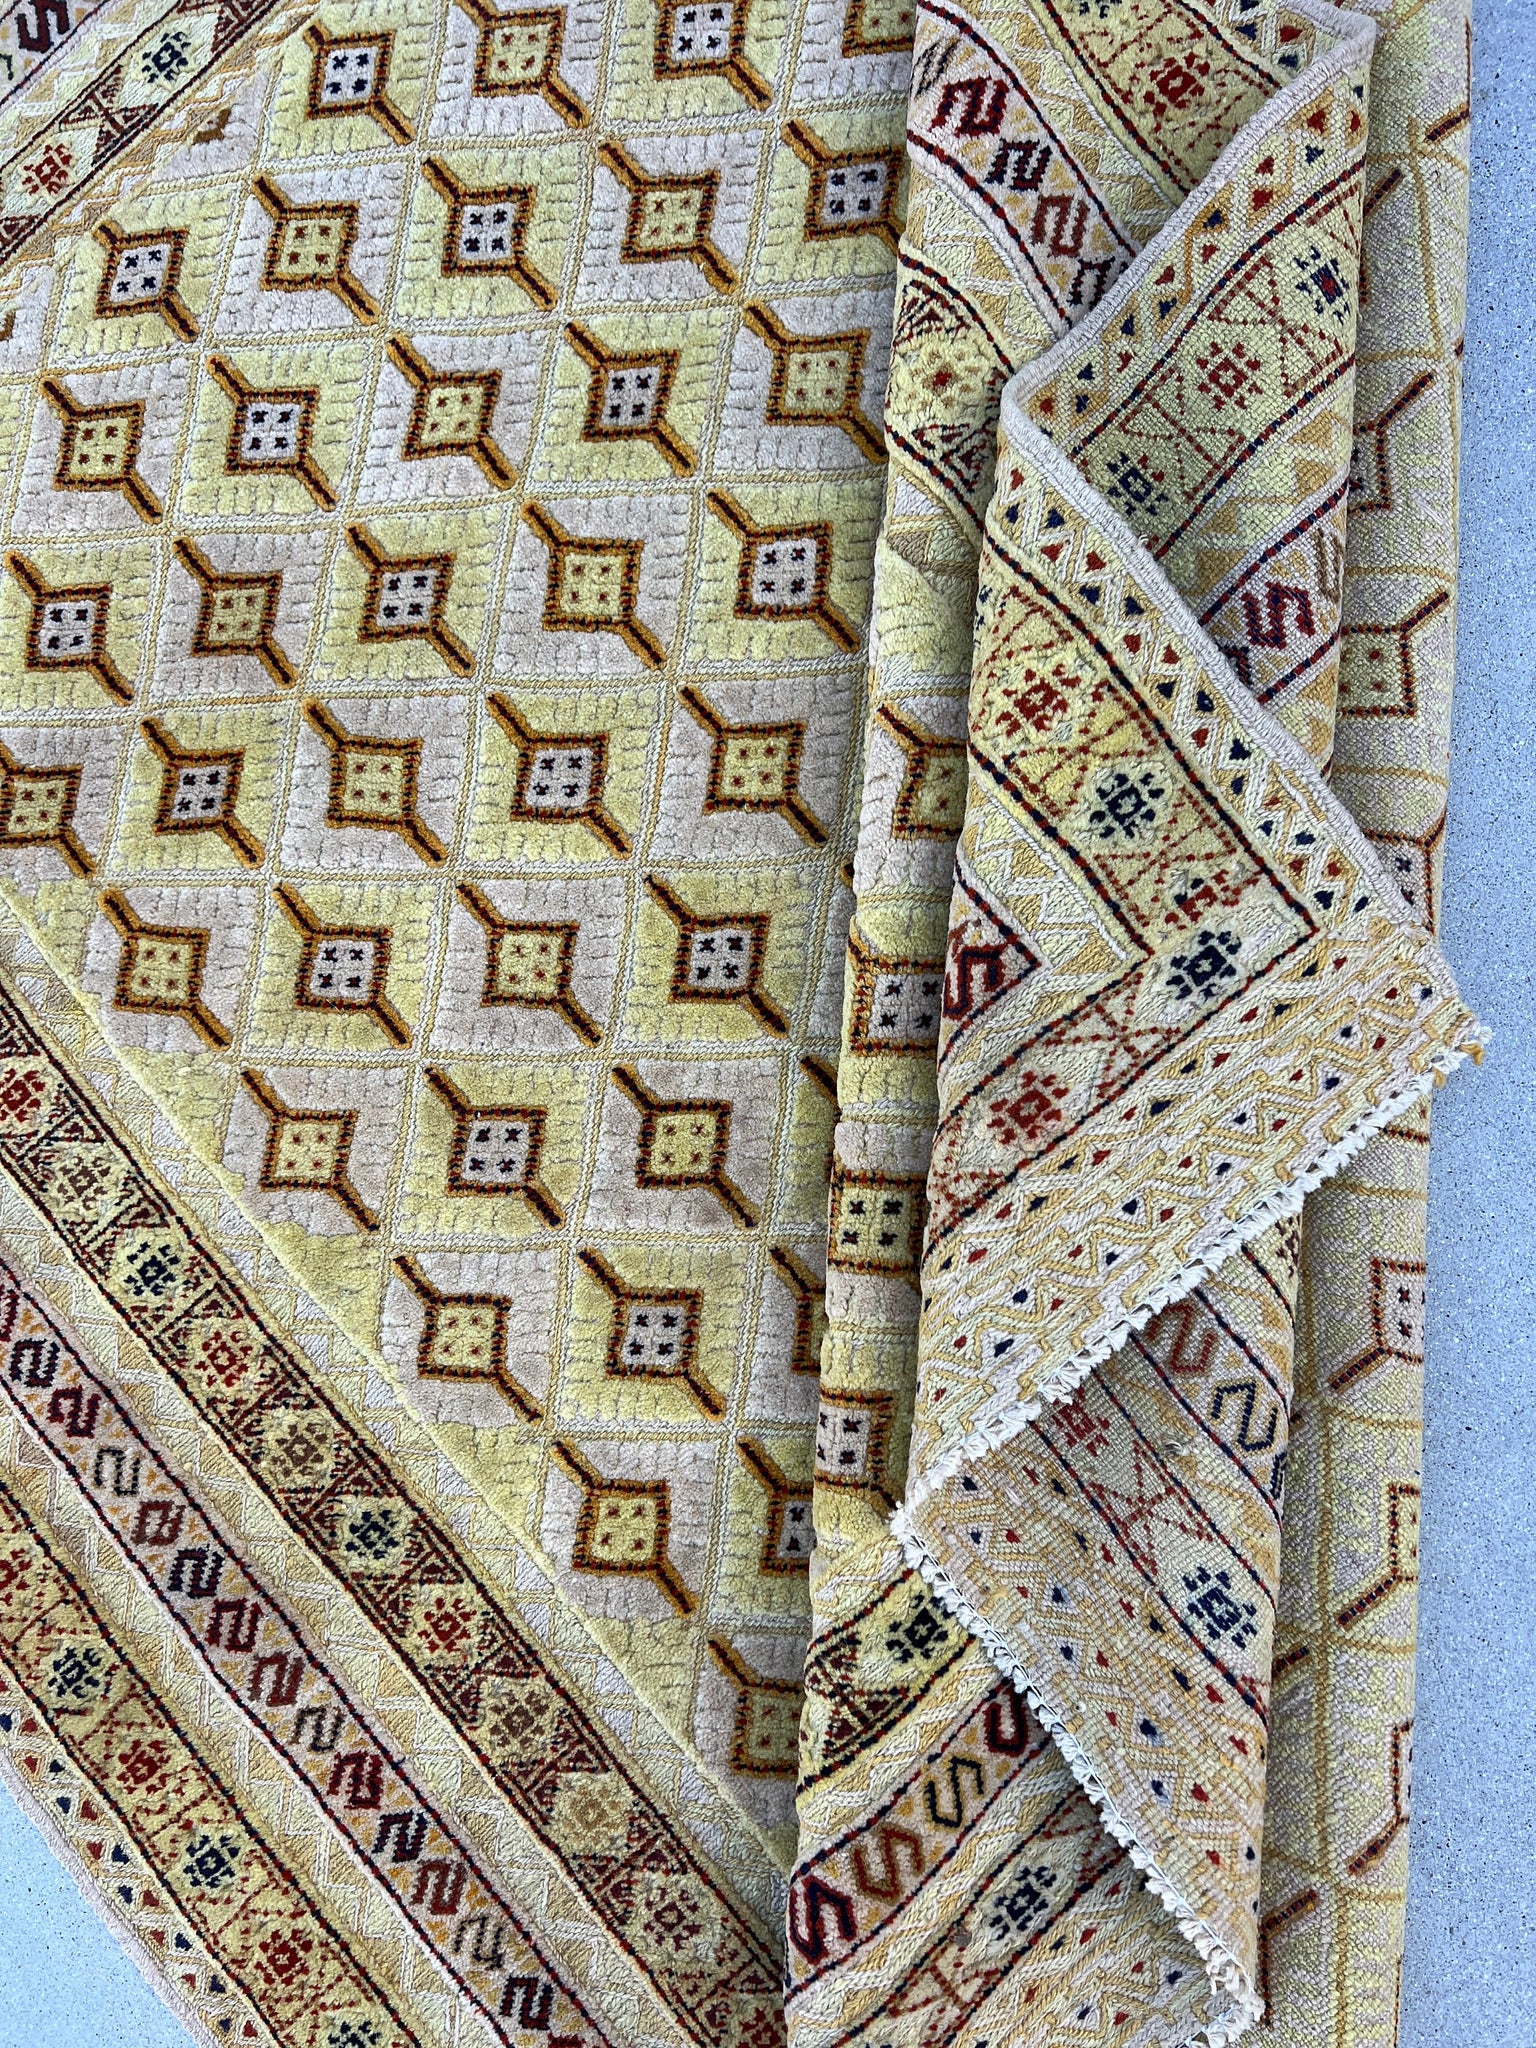 5x6 (150x180) Handmade Afghan Rug | Taupe Yellow Cornsilk Cream Beige Muted Brown Red Blue | Hand Knotted Geometric Turkish Wool